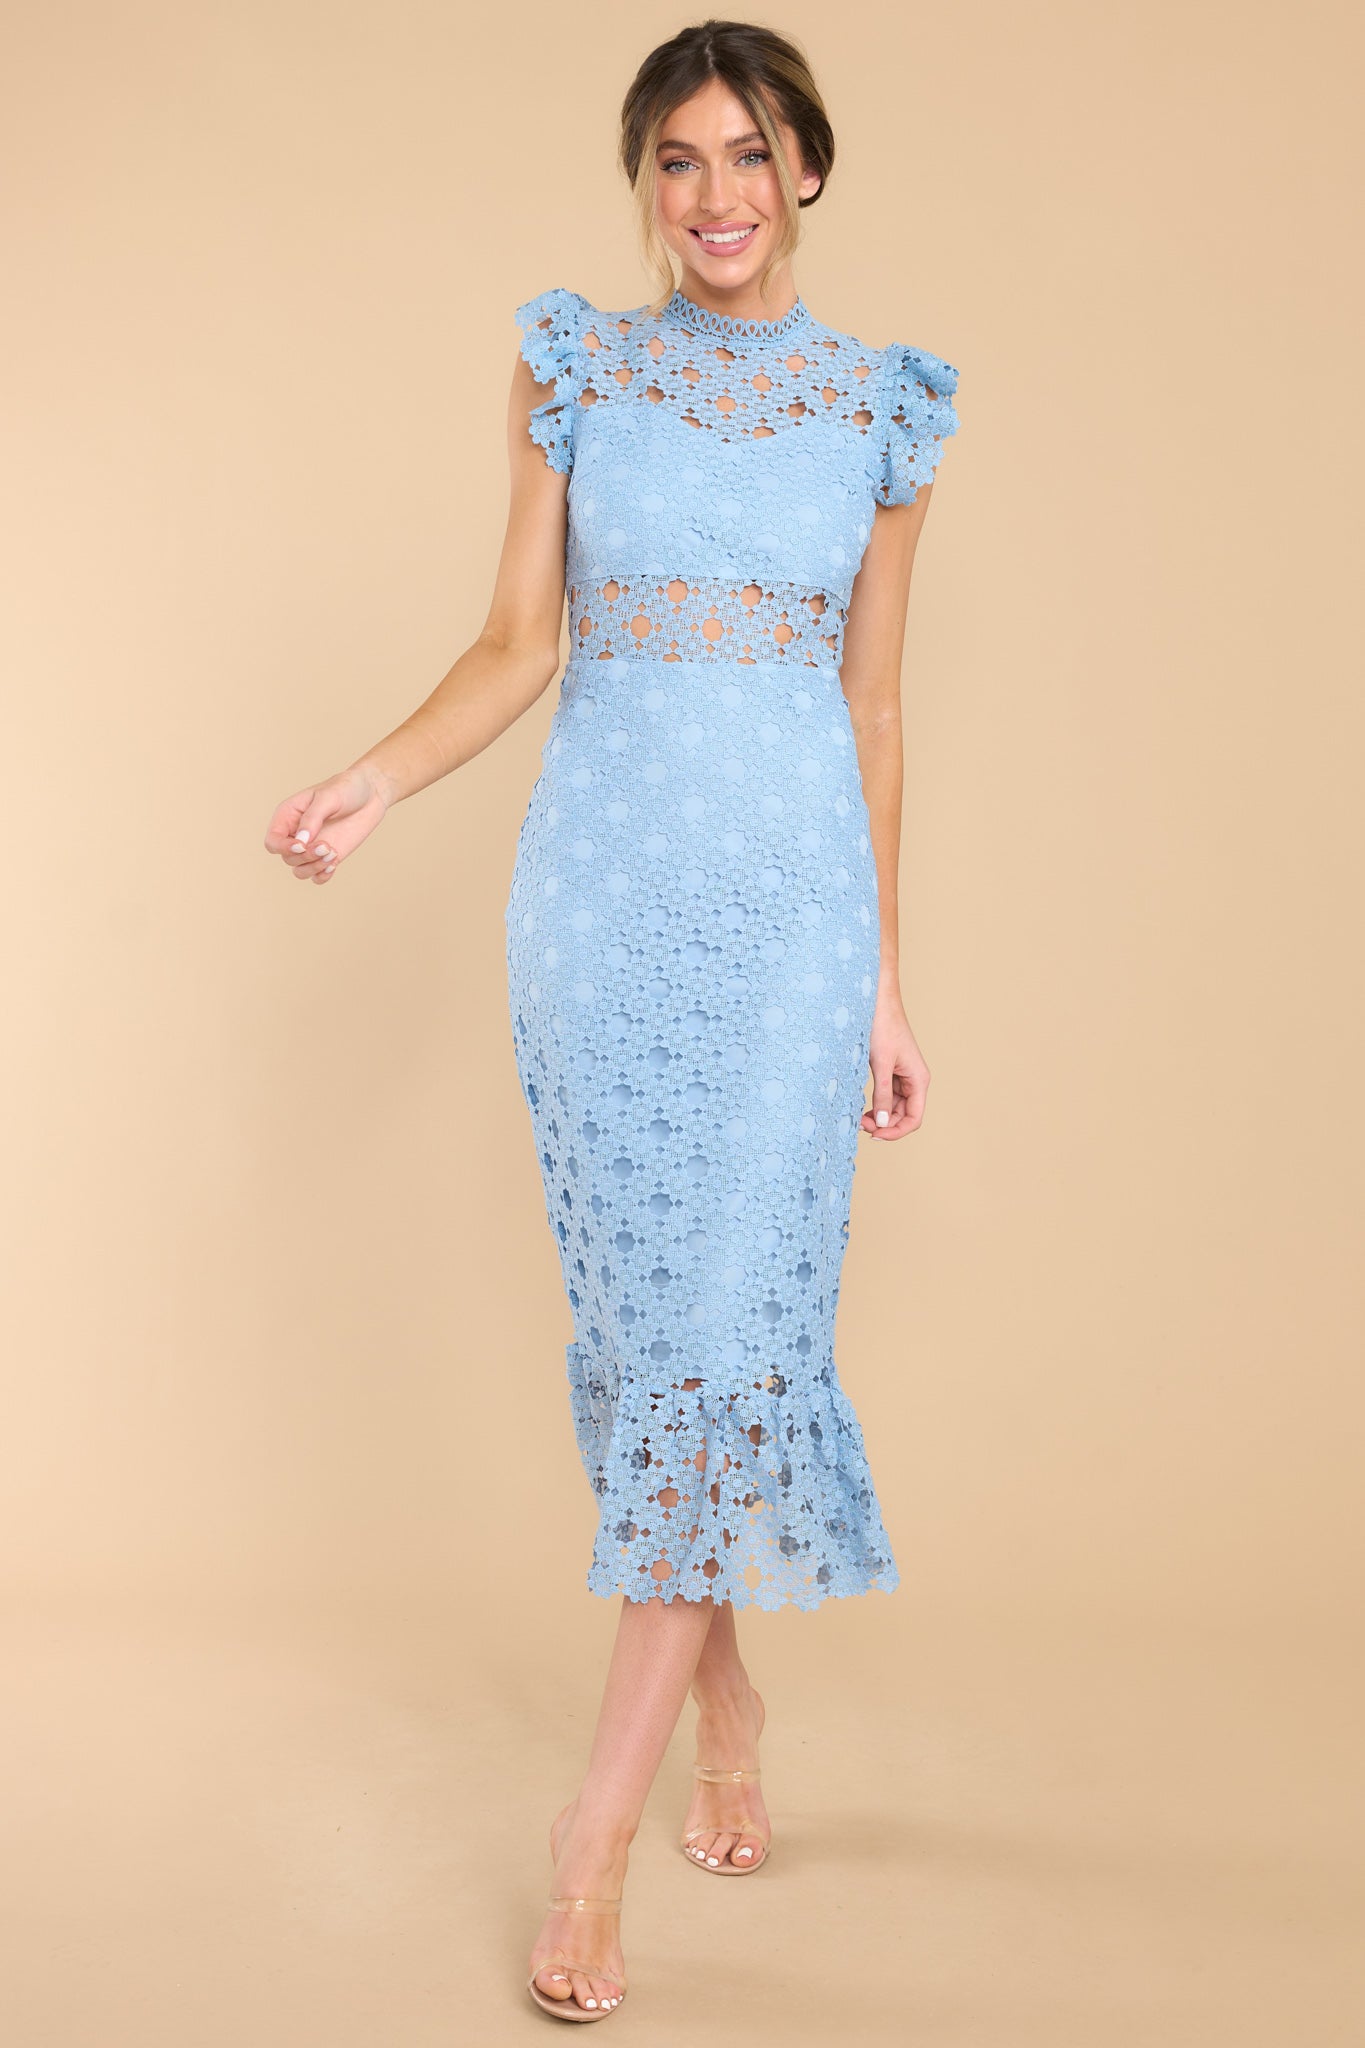 Stunning Blue Lace Dress - Midi Dresses